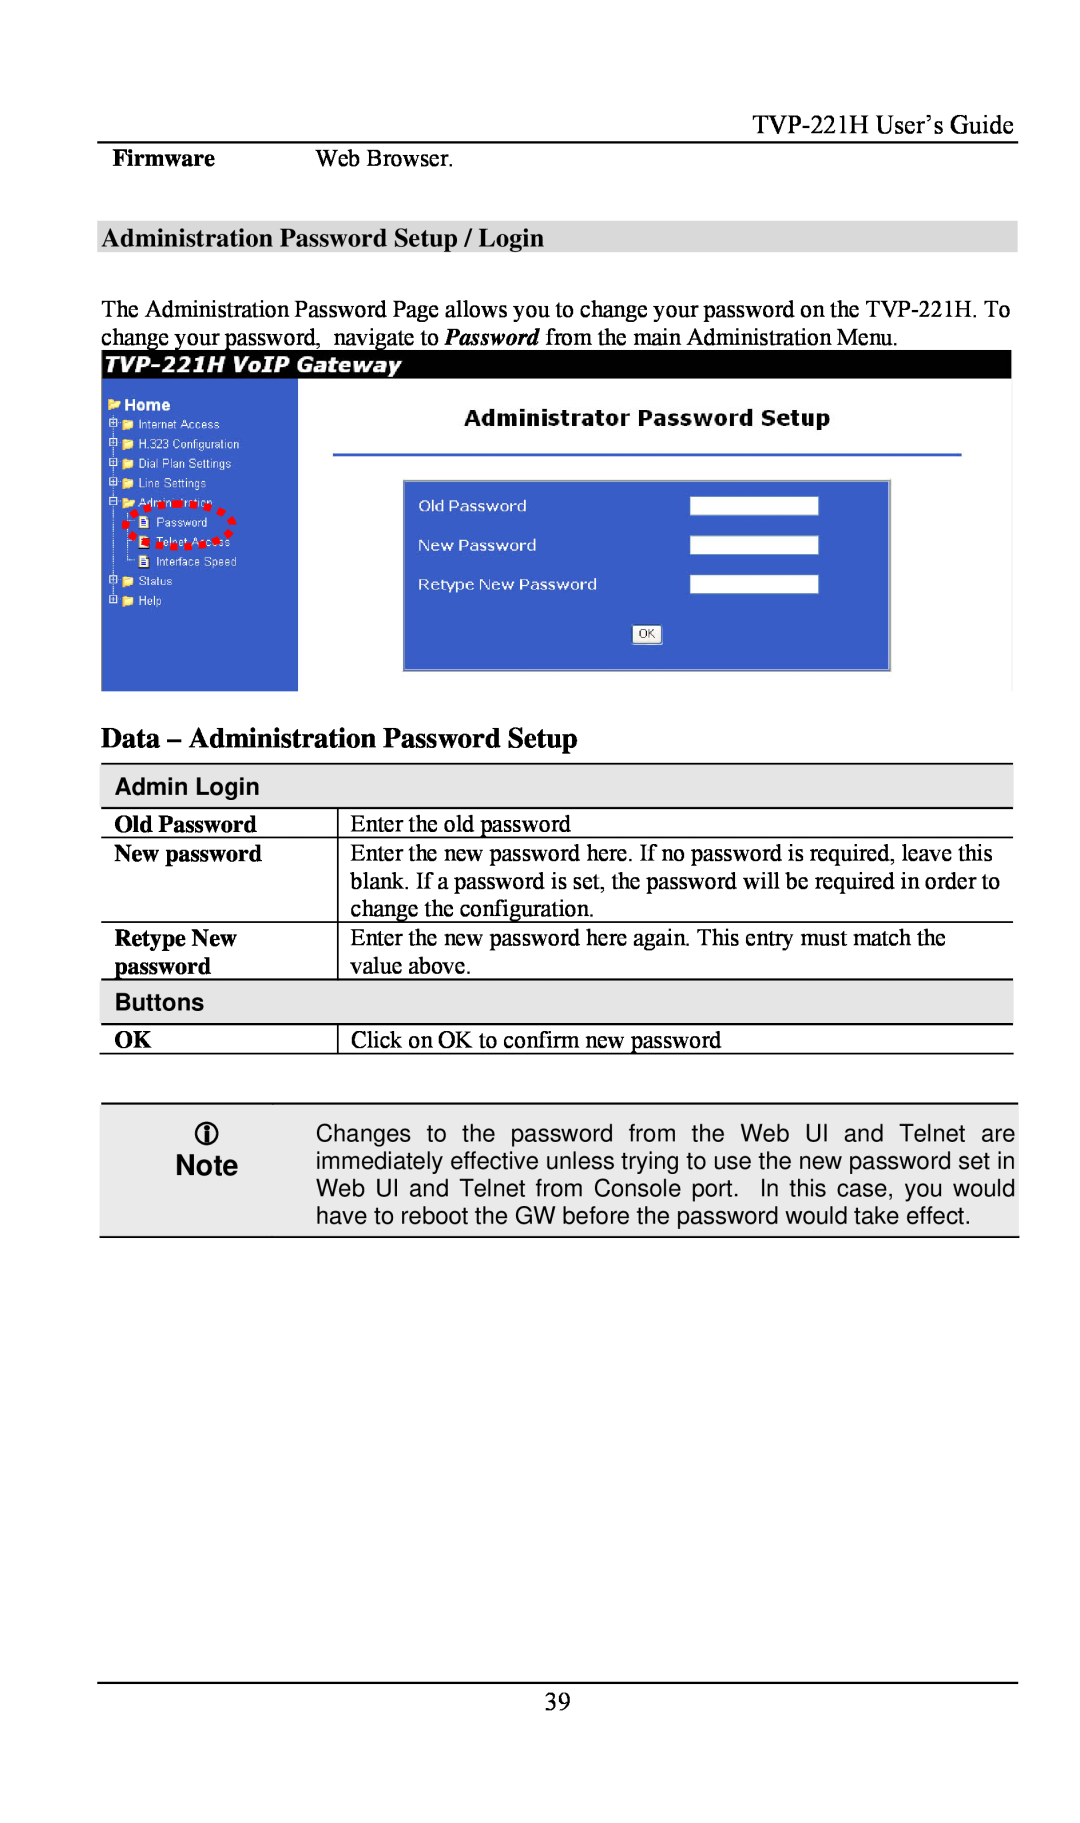 TRENDnet VoIP Gateway Data - Administration Password Setup, Administration Password Setup / Login, Admin Login, Buttons 